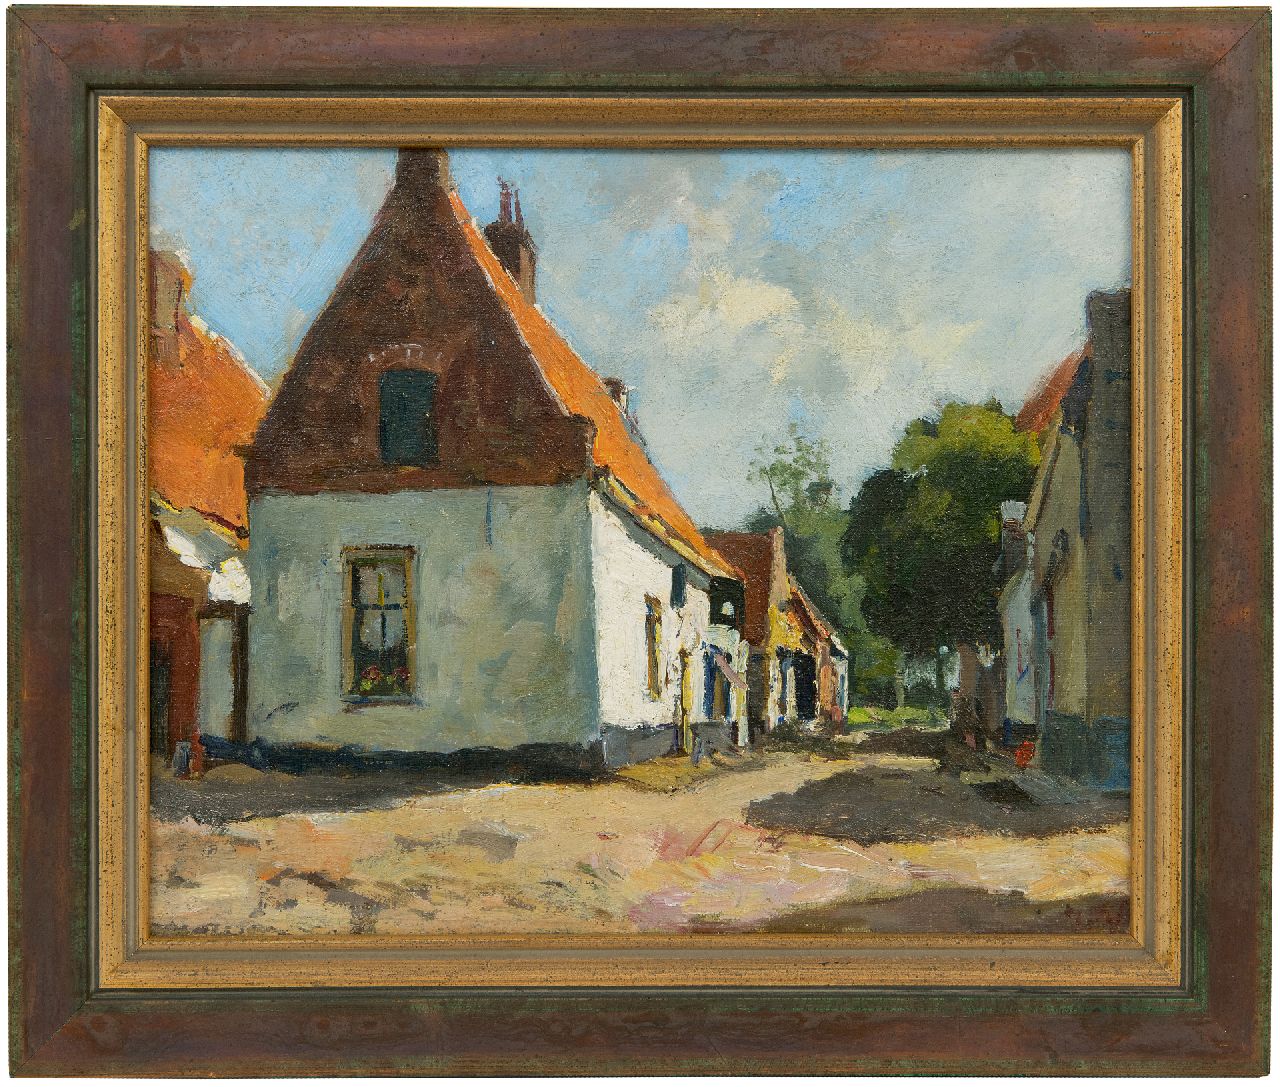 Vuuren J. van | Jan van Vuuren | Paintings offered for sale | A sunlit village street, oil on canvas 24.1 x 30.1 cm, signed l.r.